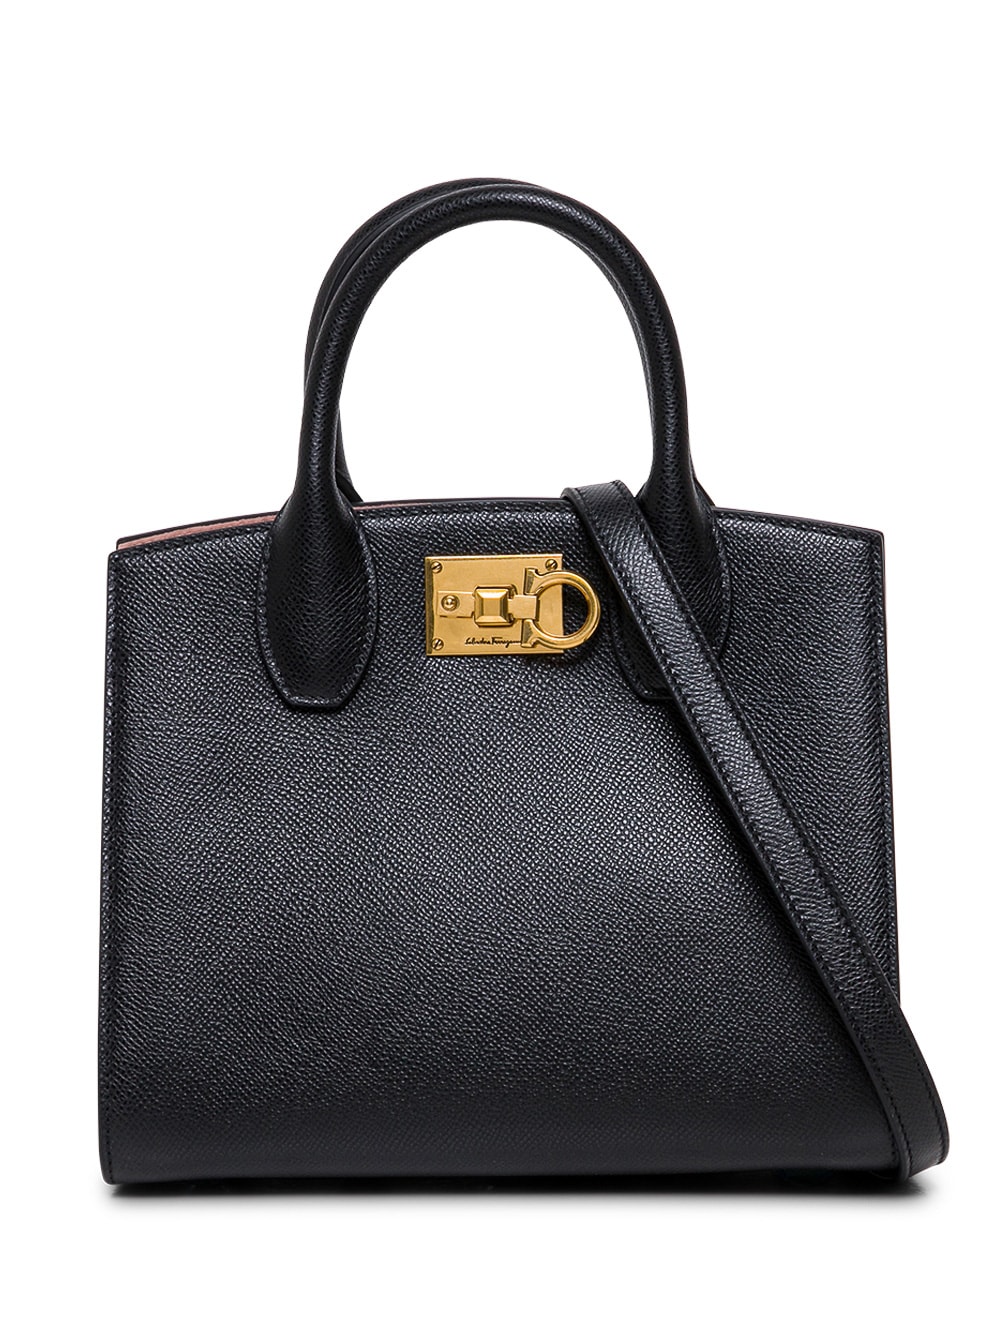 Salvatore Ferragamo Studio Box Black Leather Handbag